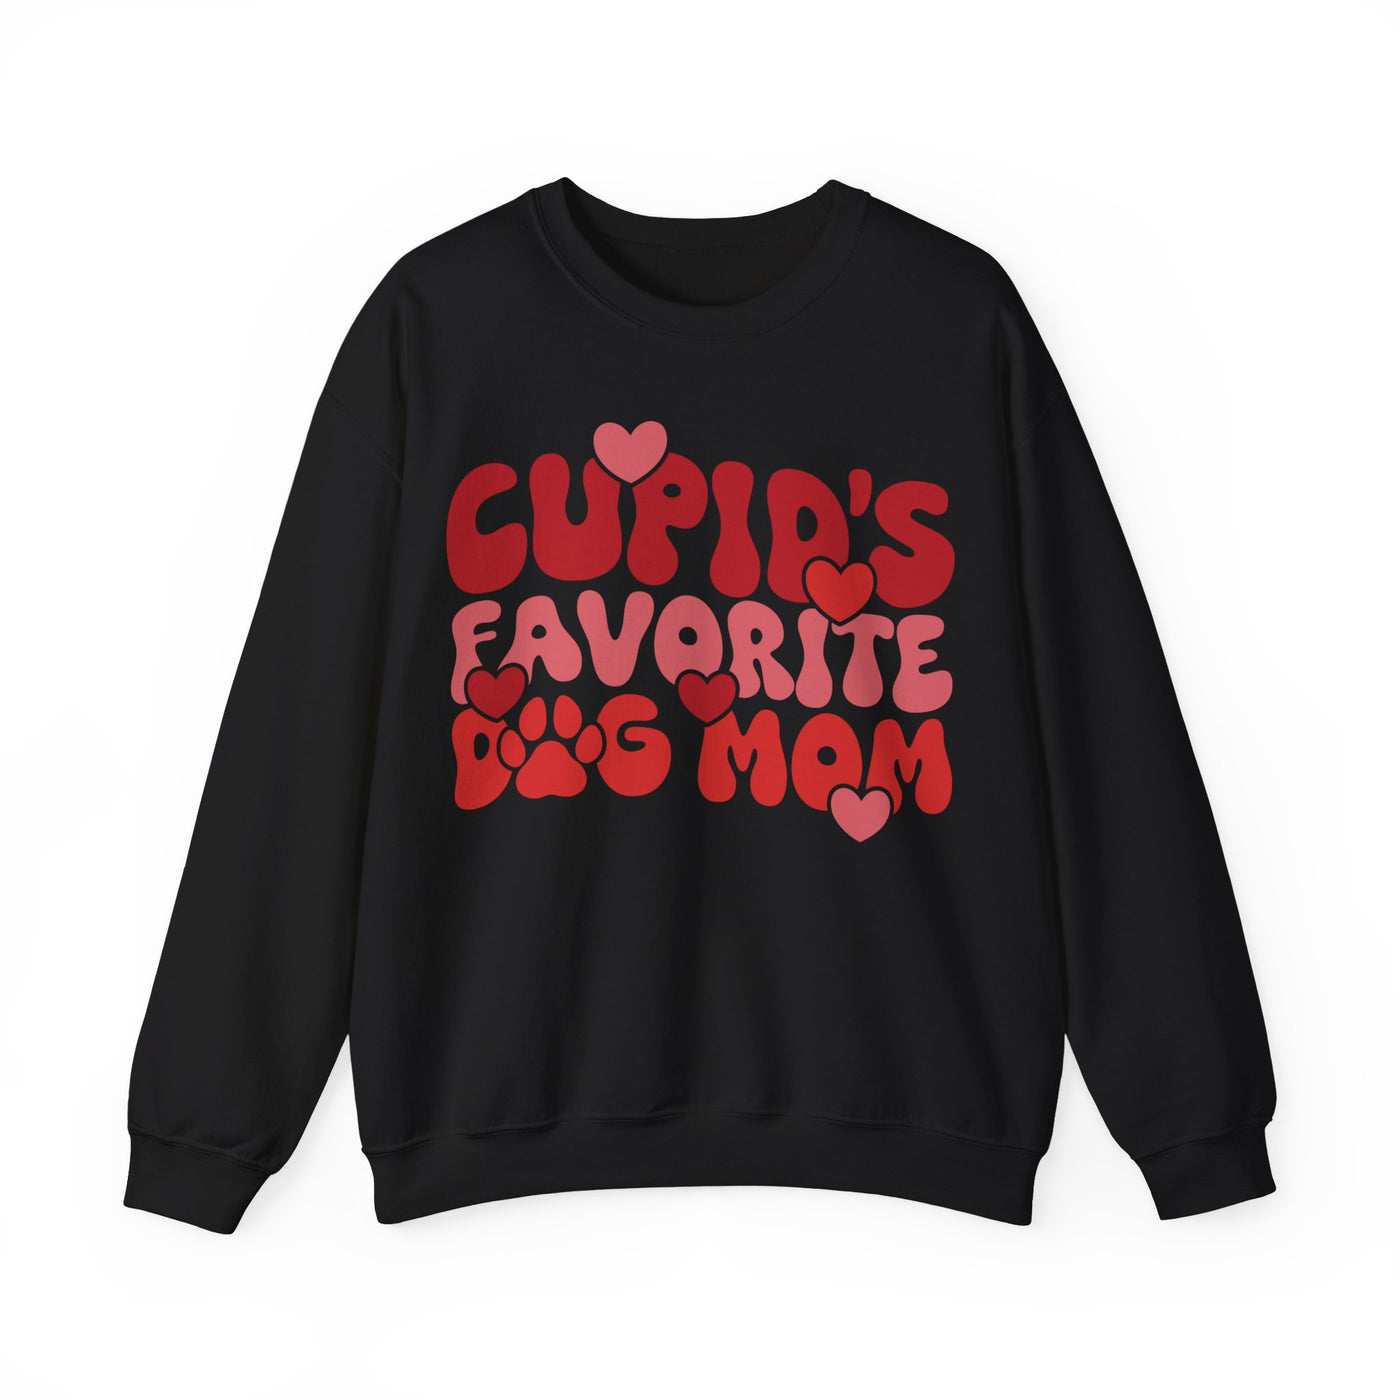 Cupids Favorite Dog Mom Sweatshirt